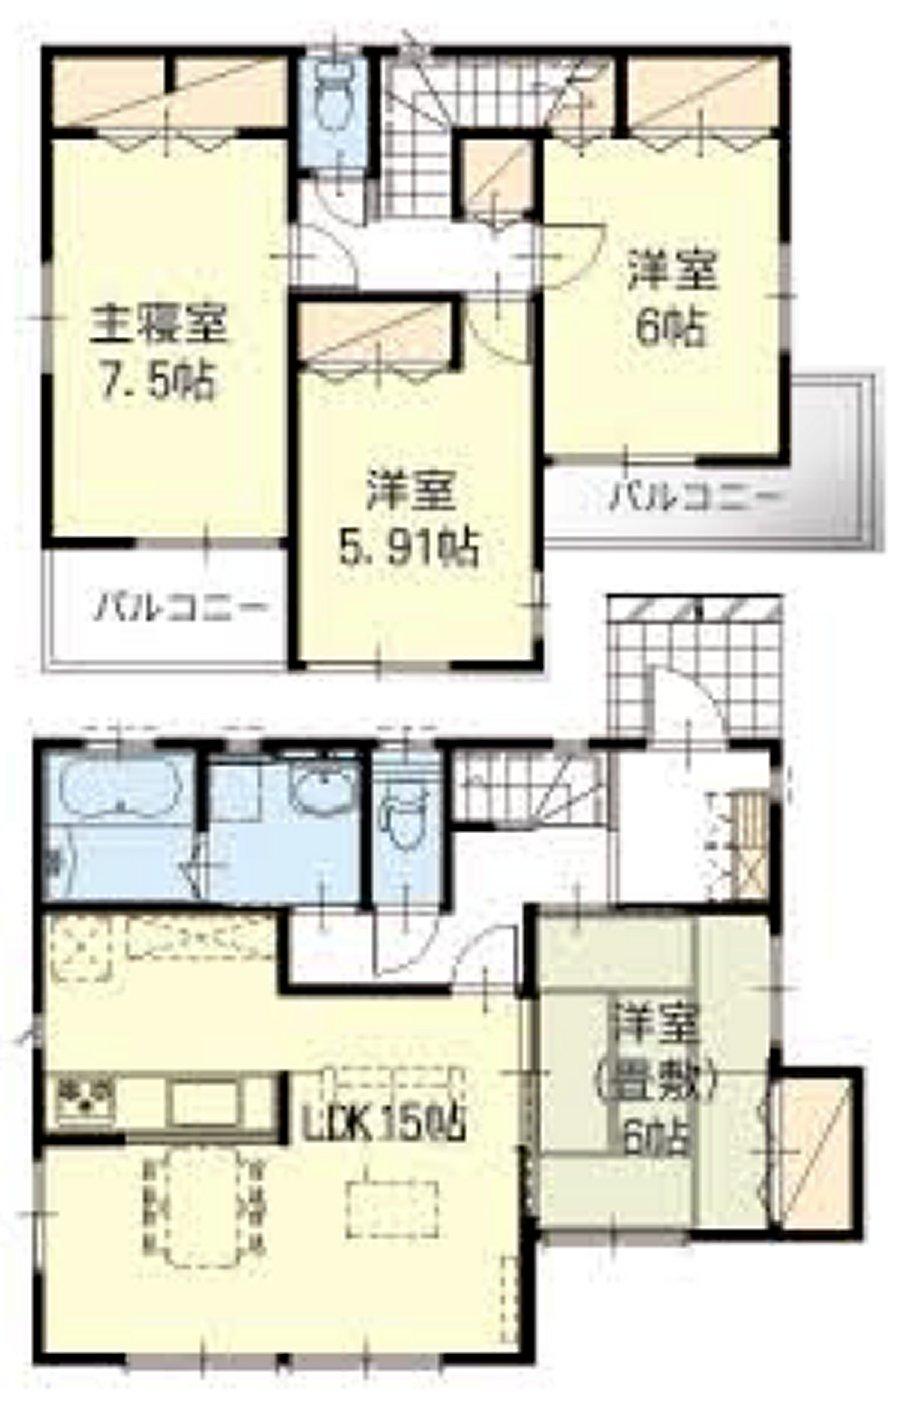 Floor plan. Ecos Tairaya Corporation to Green Park shop 1740m